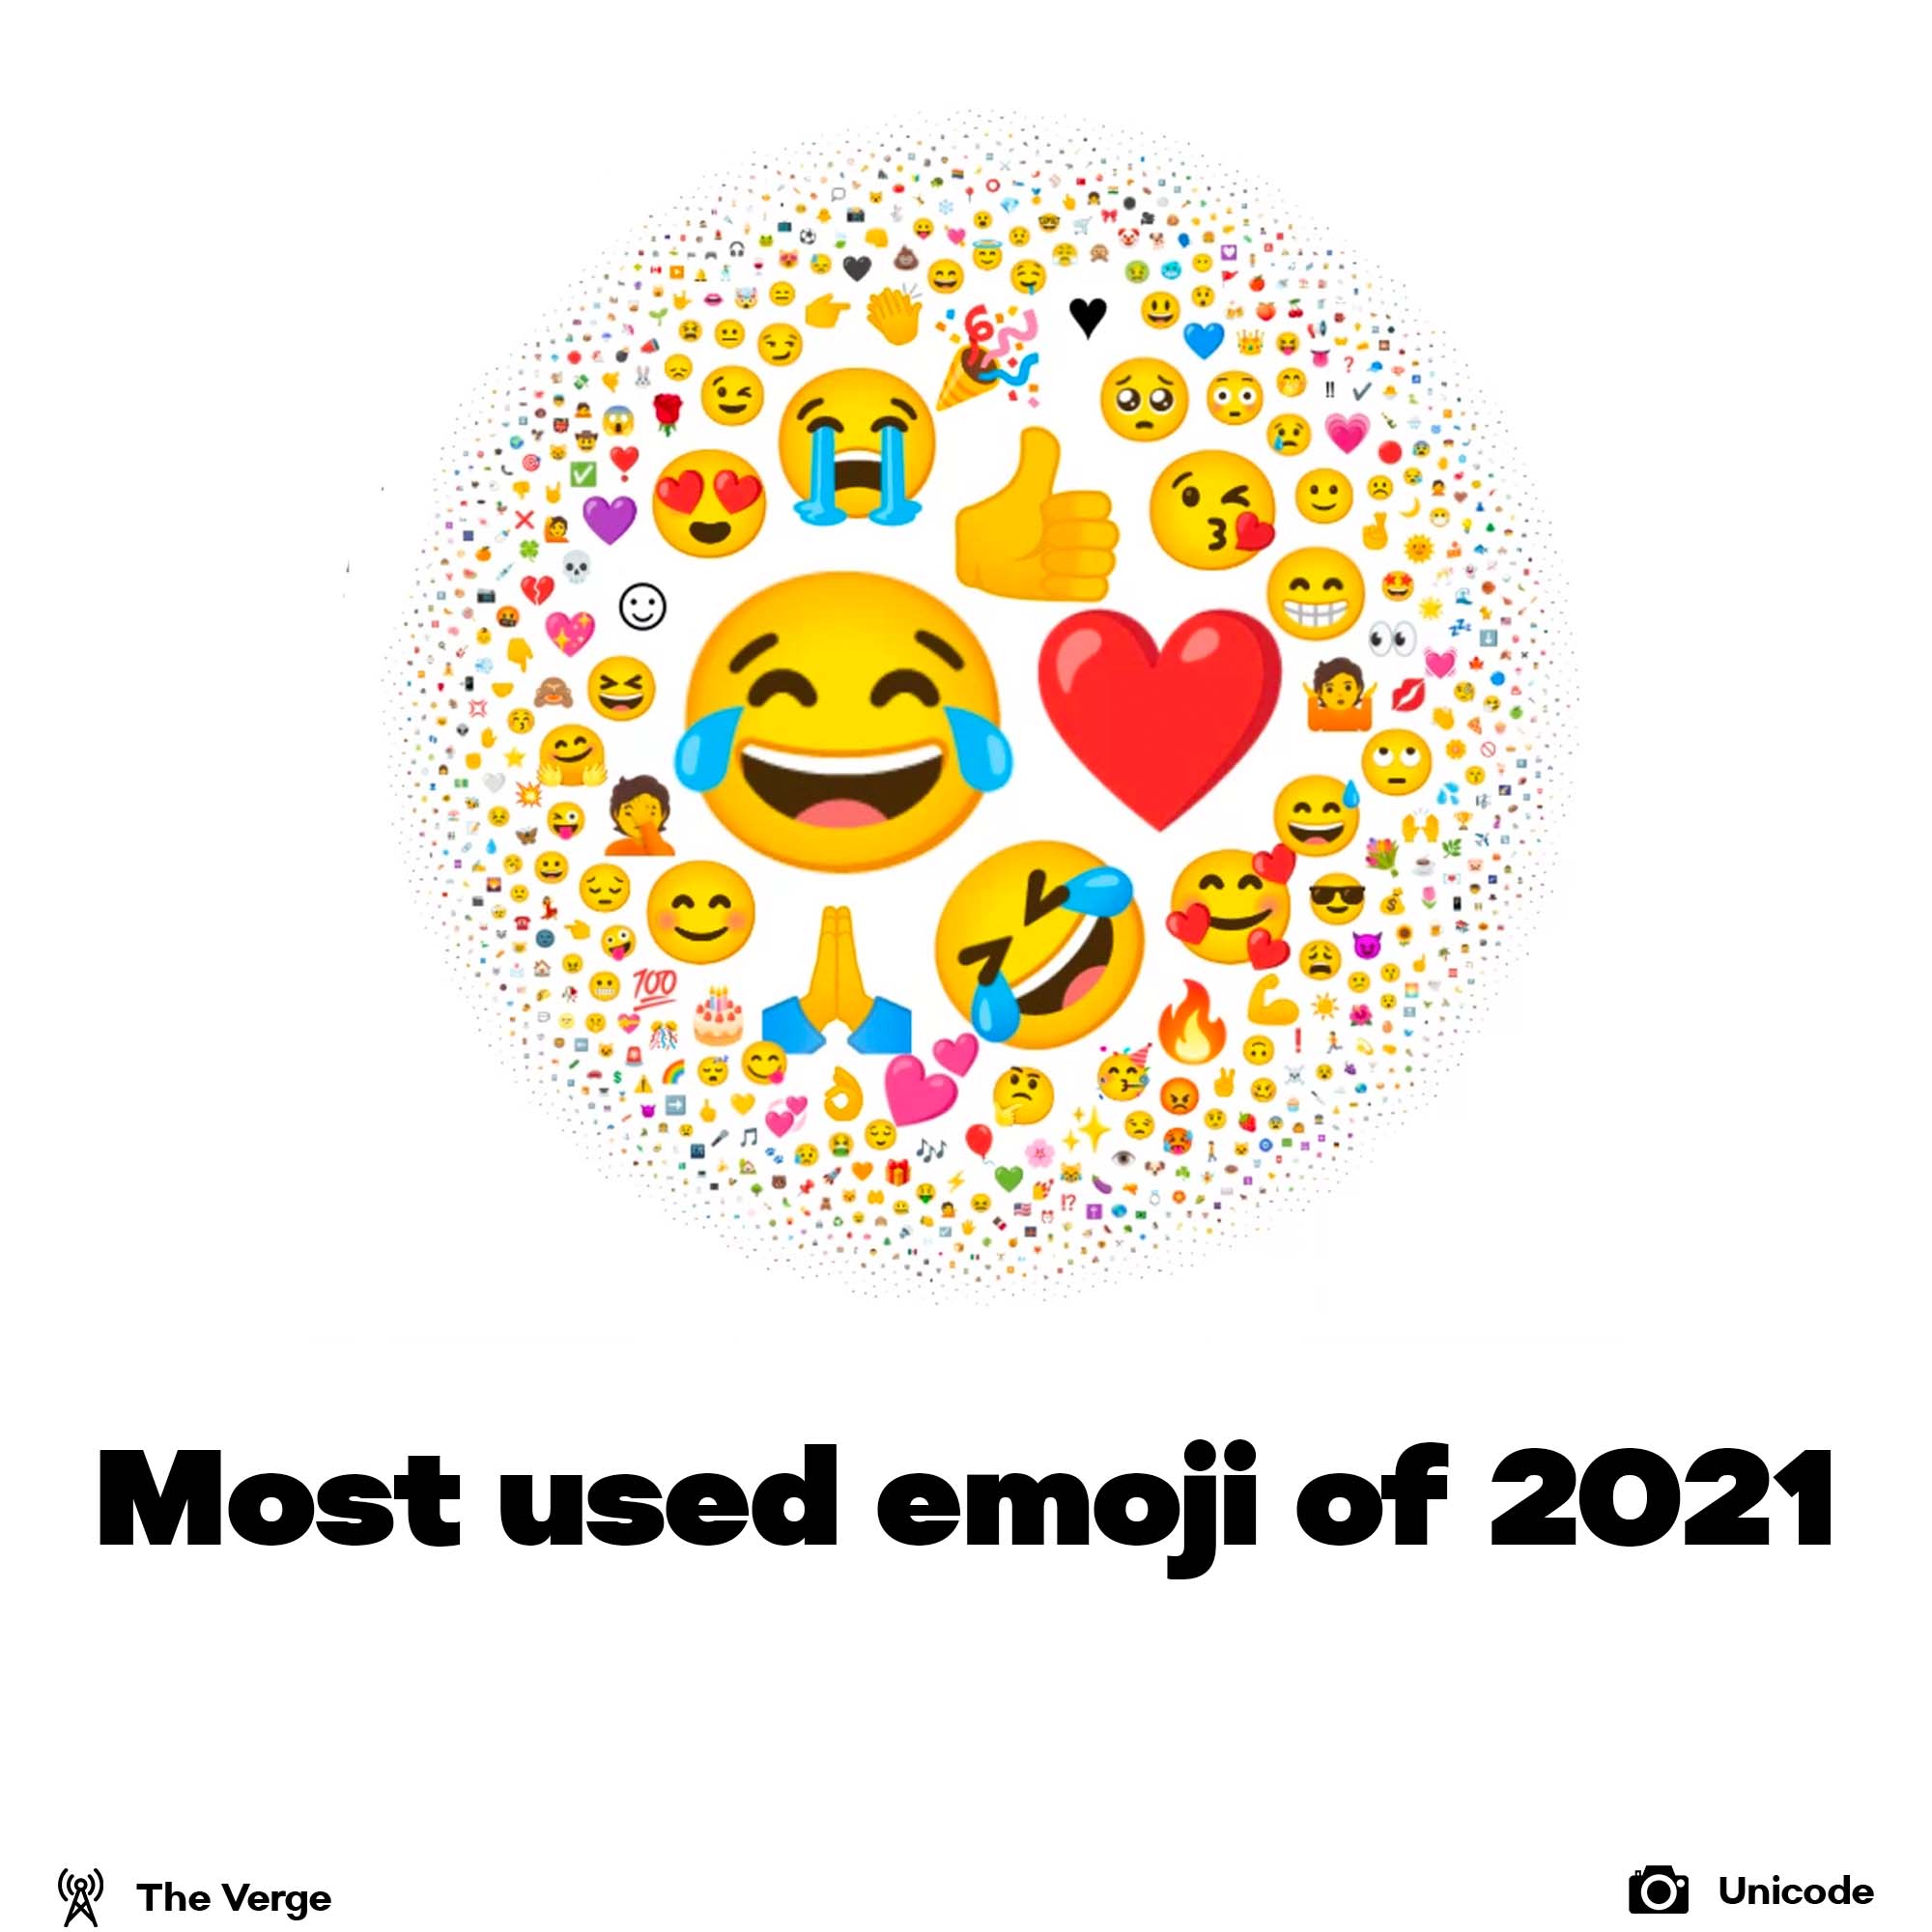 Most used emoji of 2021 is 😂